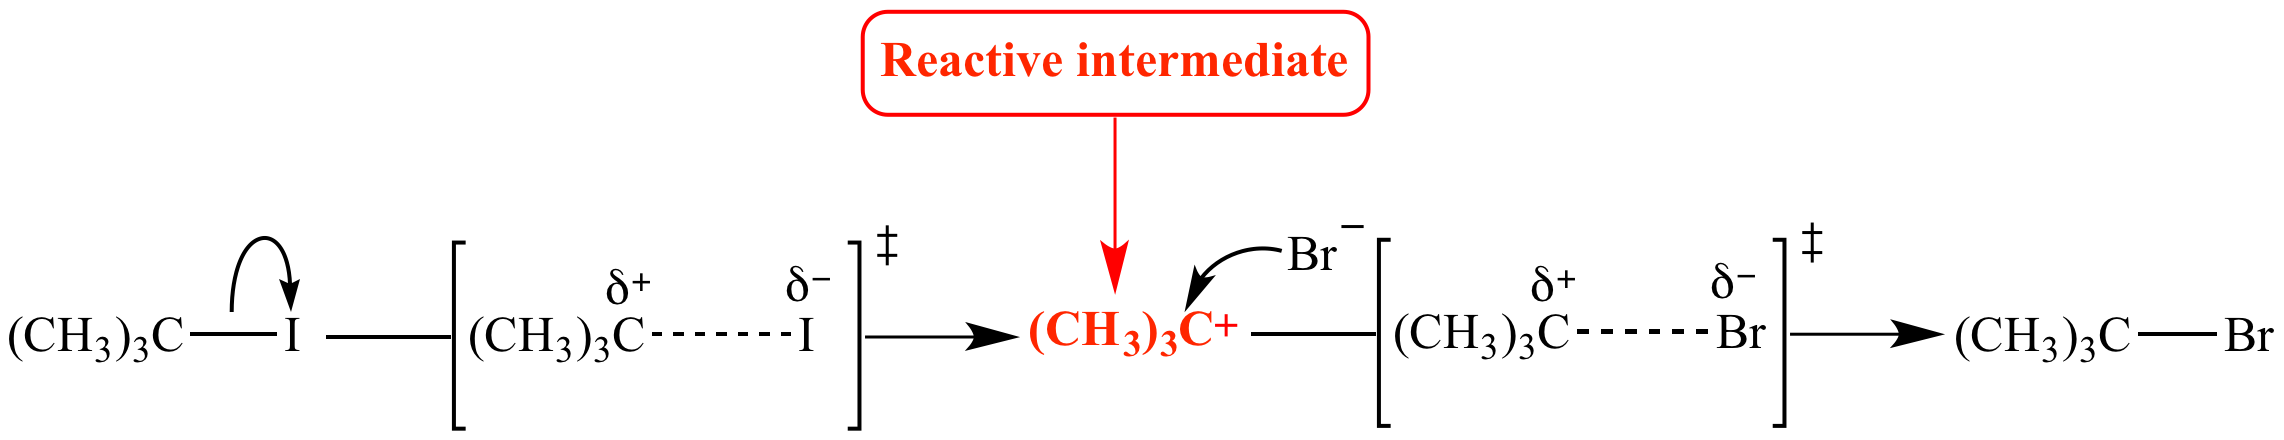 reactive intermediate